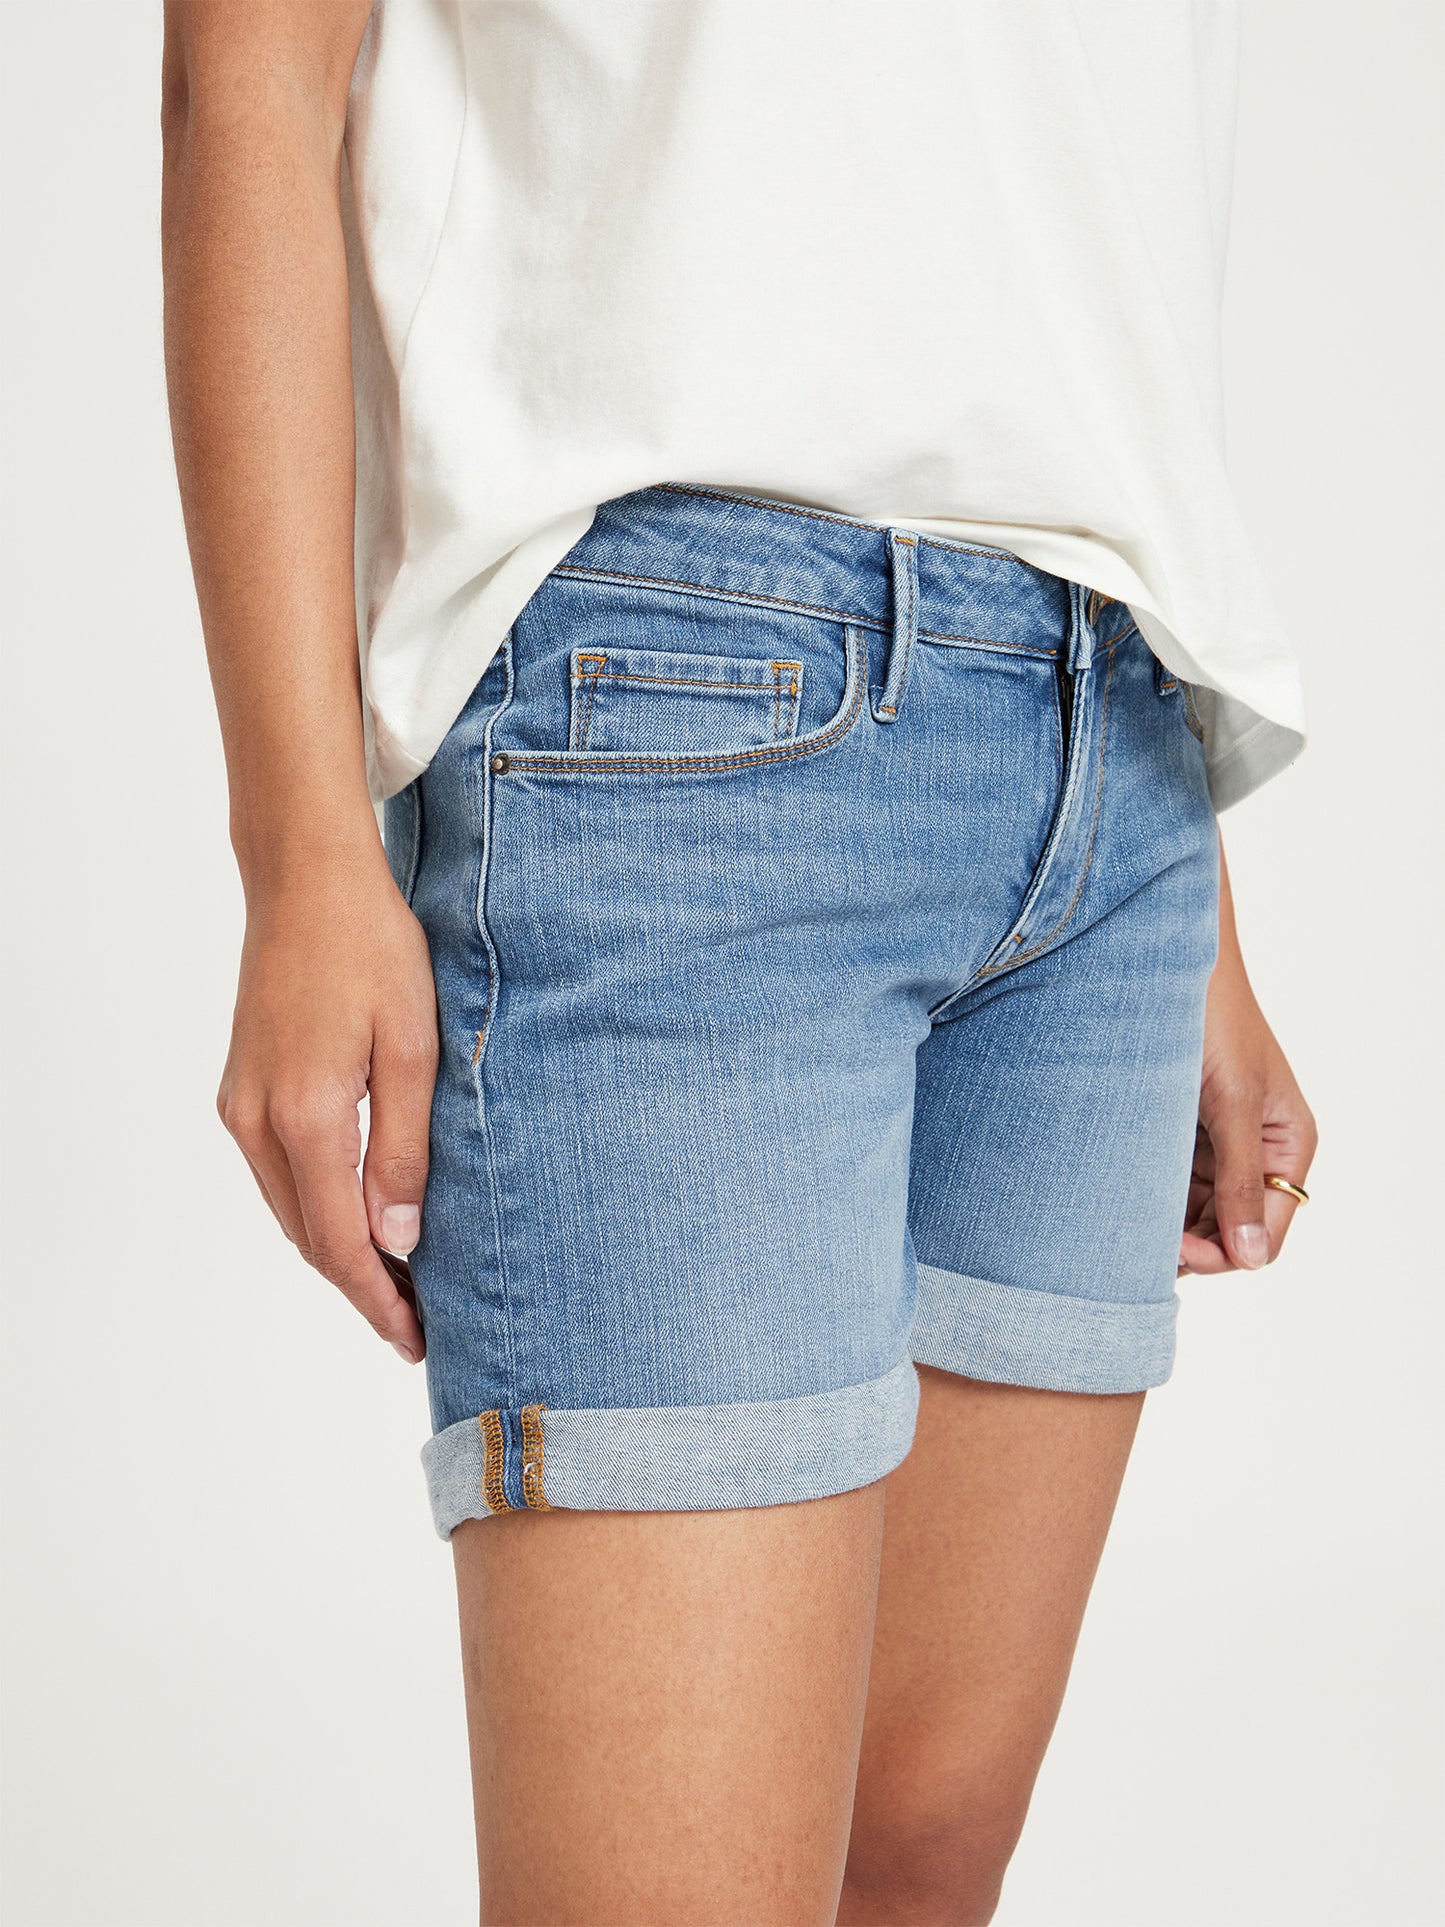 Zena women's jeans slim shorts light medium blue